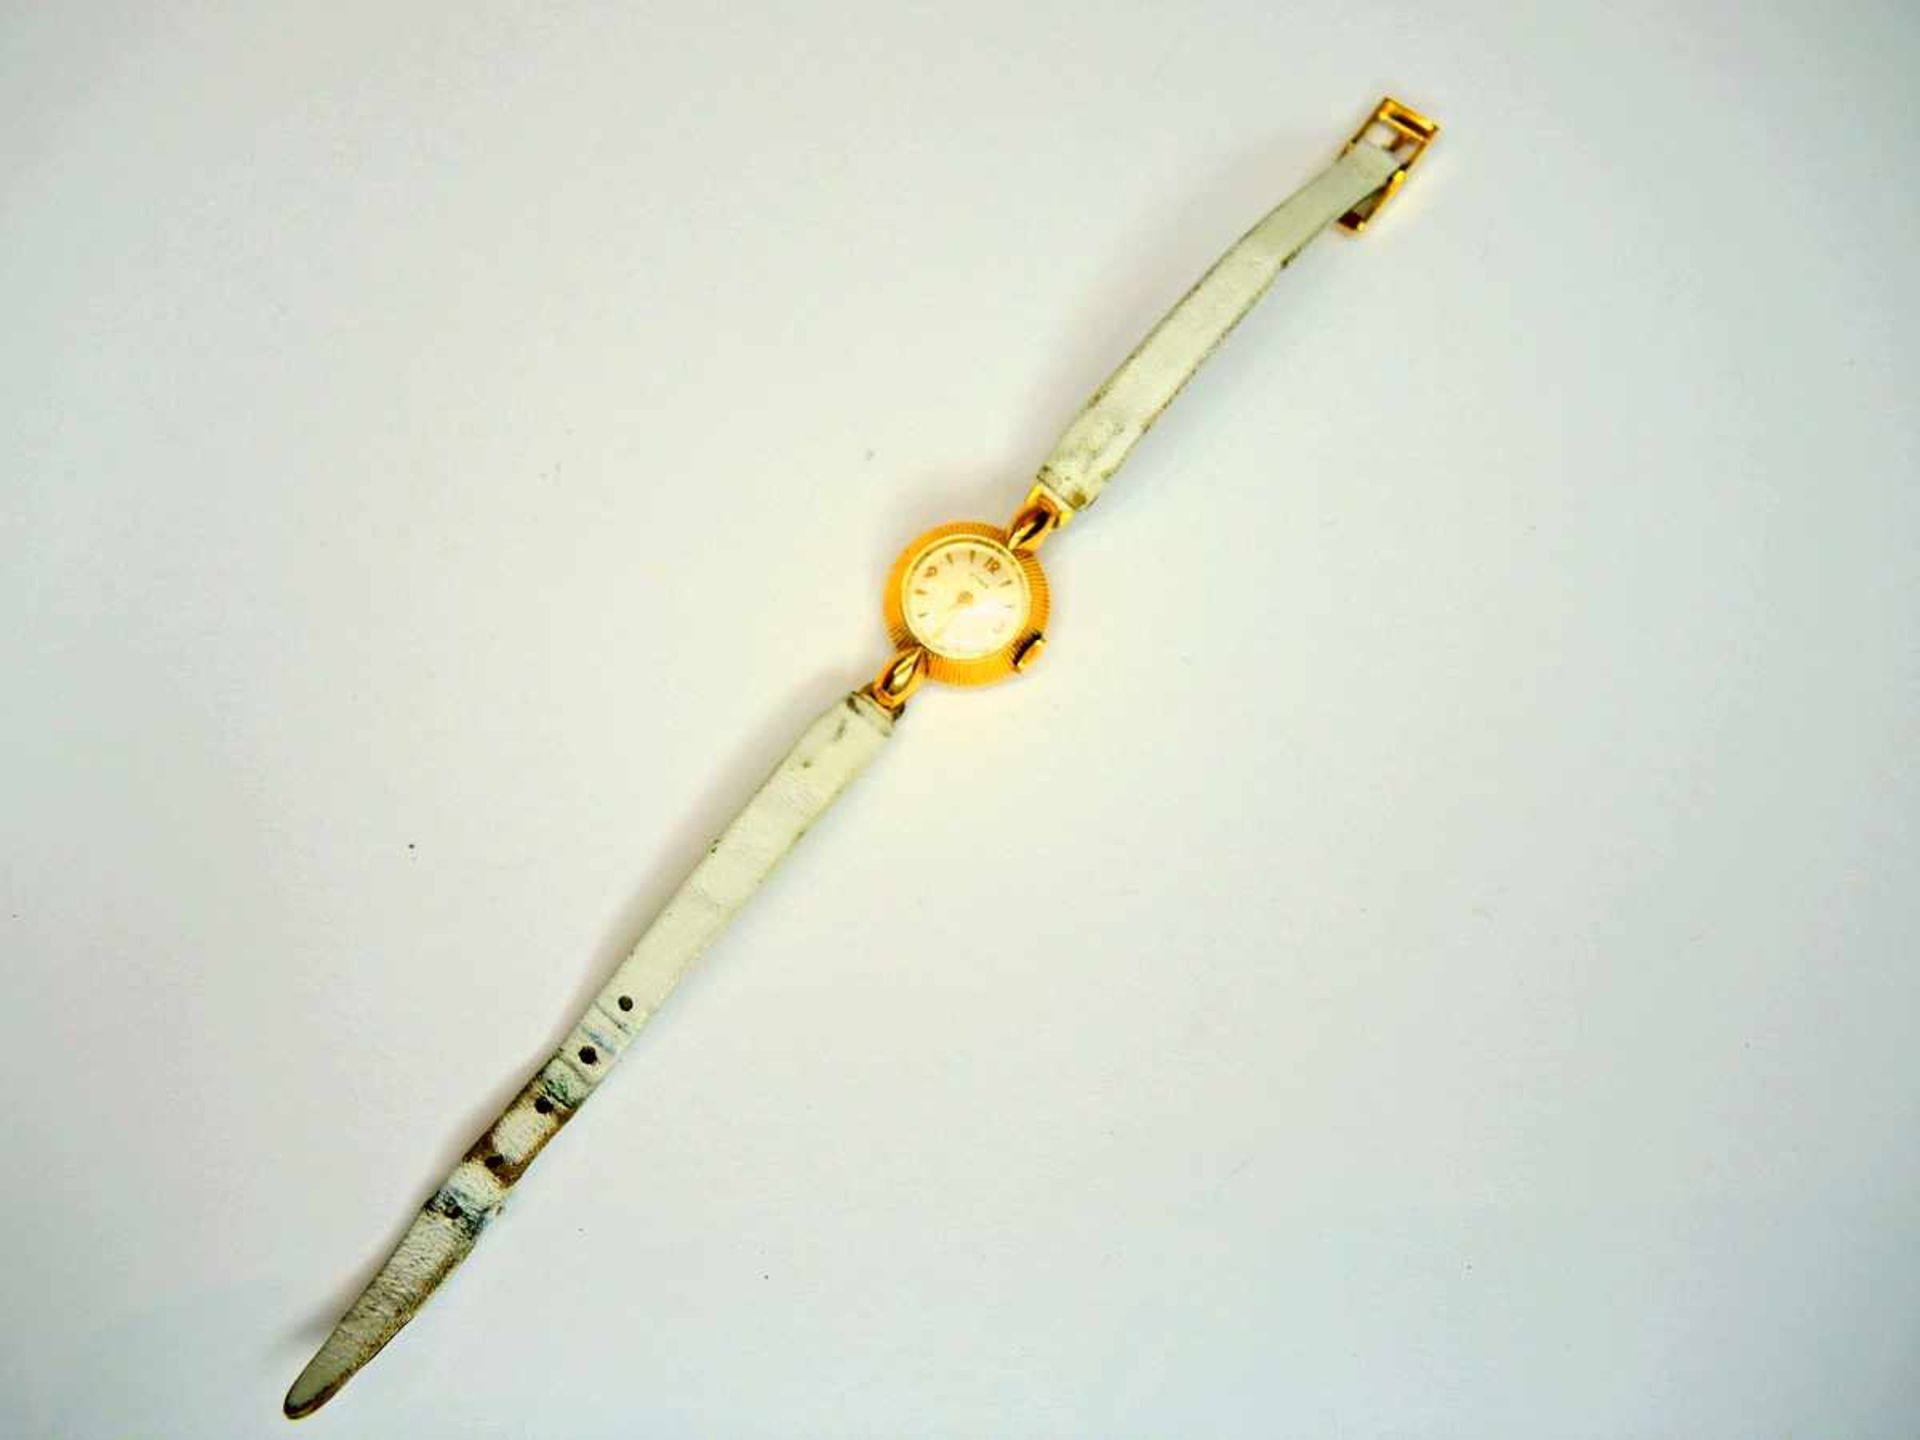 Damen-Armbanduhr 14 K., Firma CYMA, Handaufzug defekt. 1960er- Jahre. Ø ca. 2 cm, Gewicht 9 g